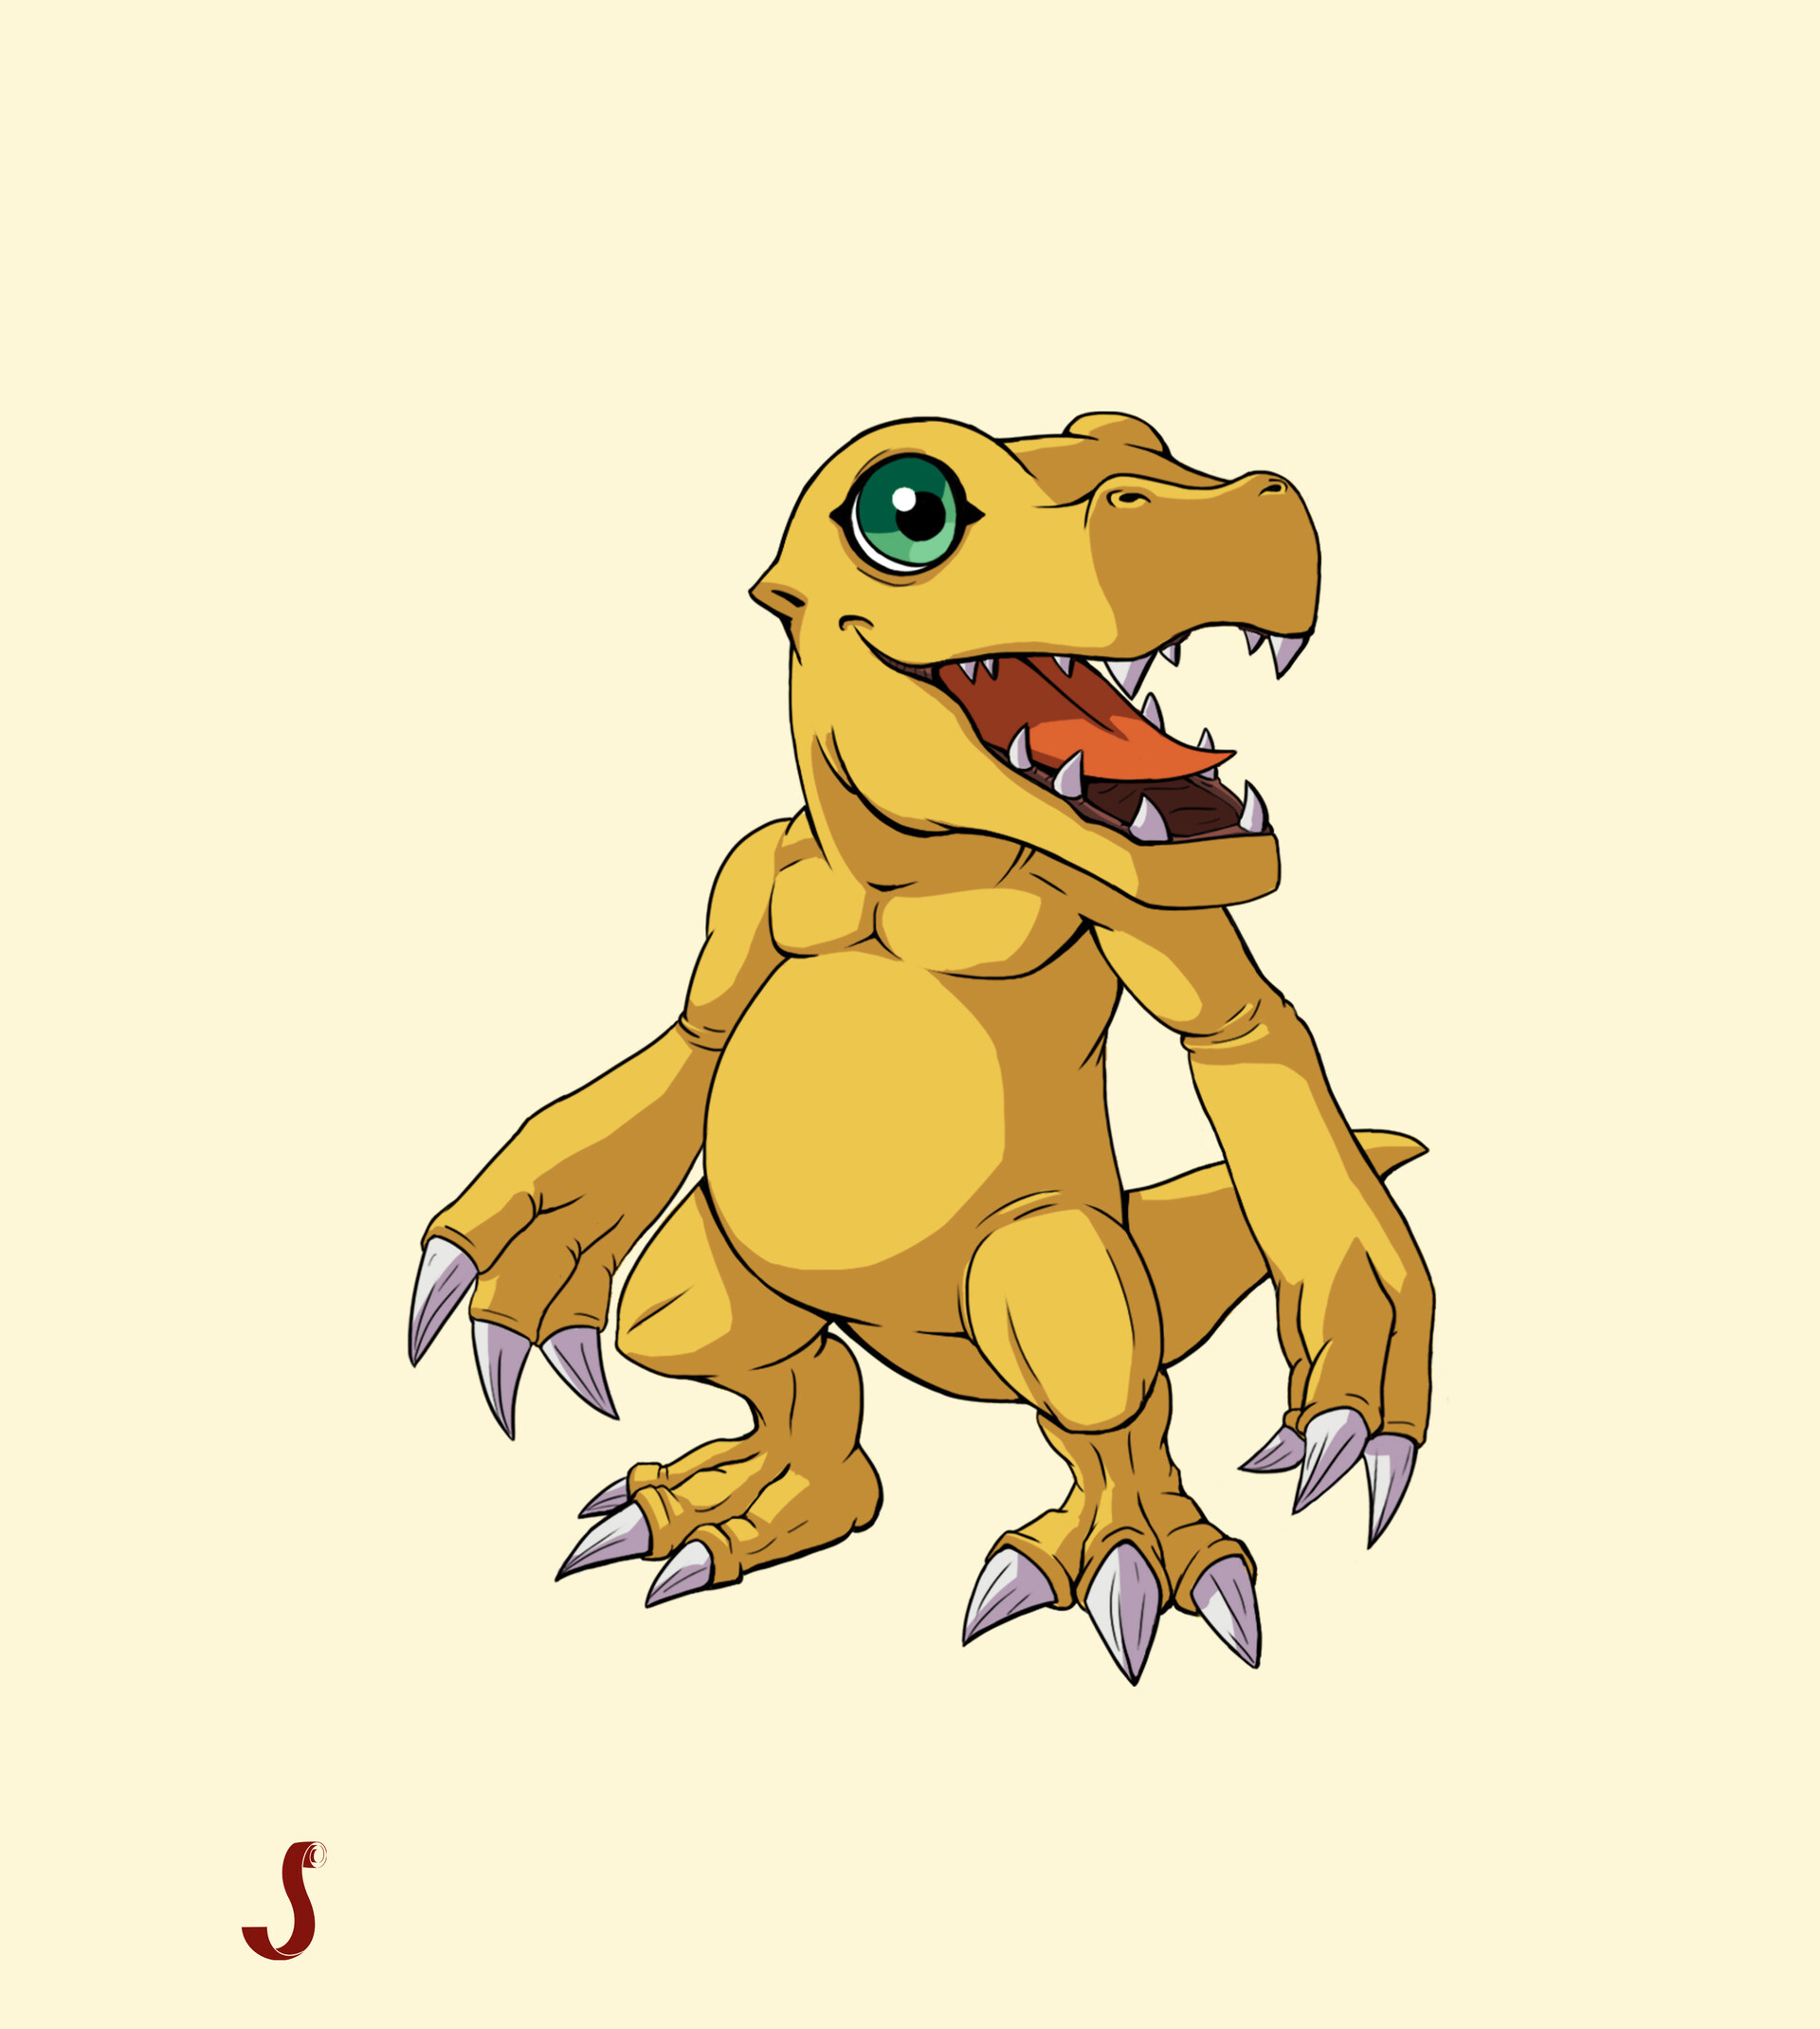 Digimon Profile/012, Digimon Wiki